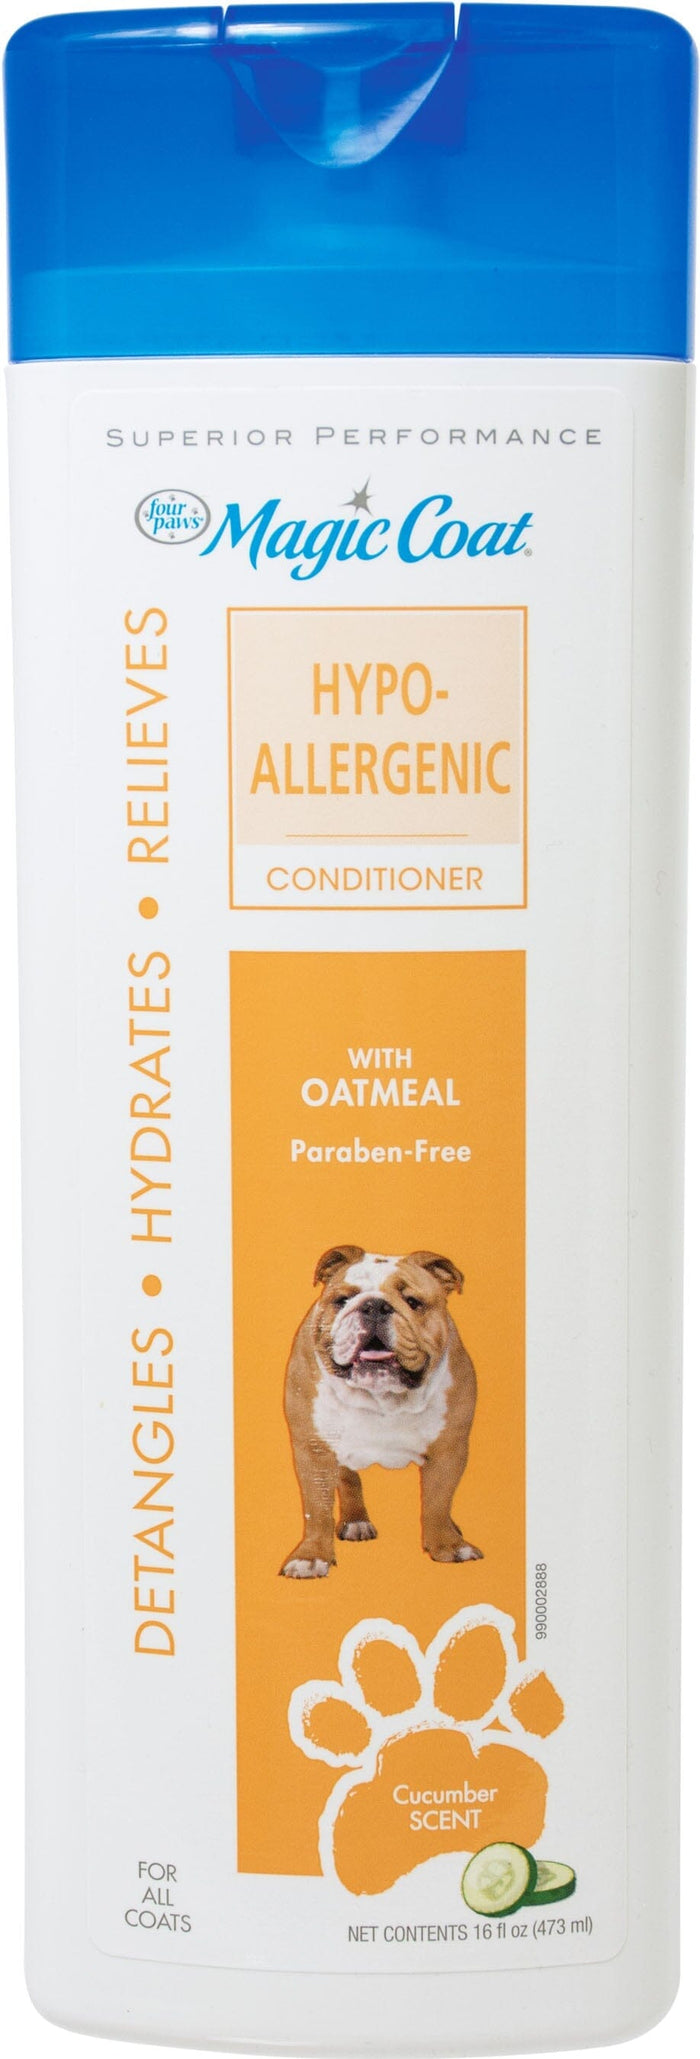 Four Paws Magic Coat Hypo-Allergenic pet Conditioner - Oatmeal/Cucumbe - 16 Oz